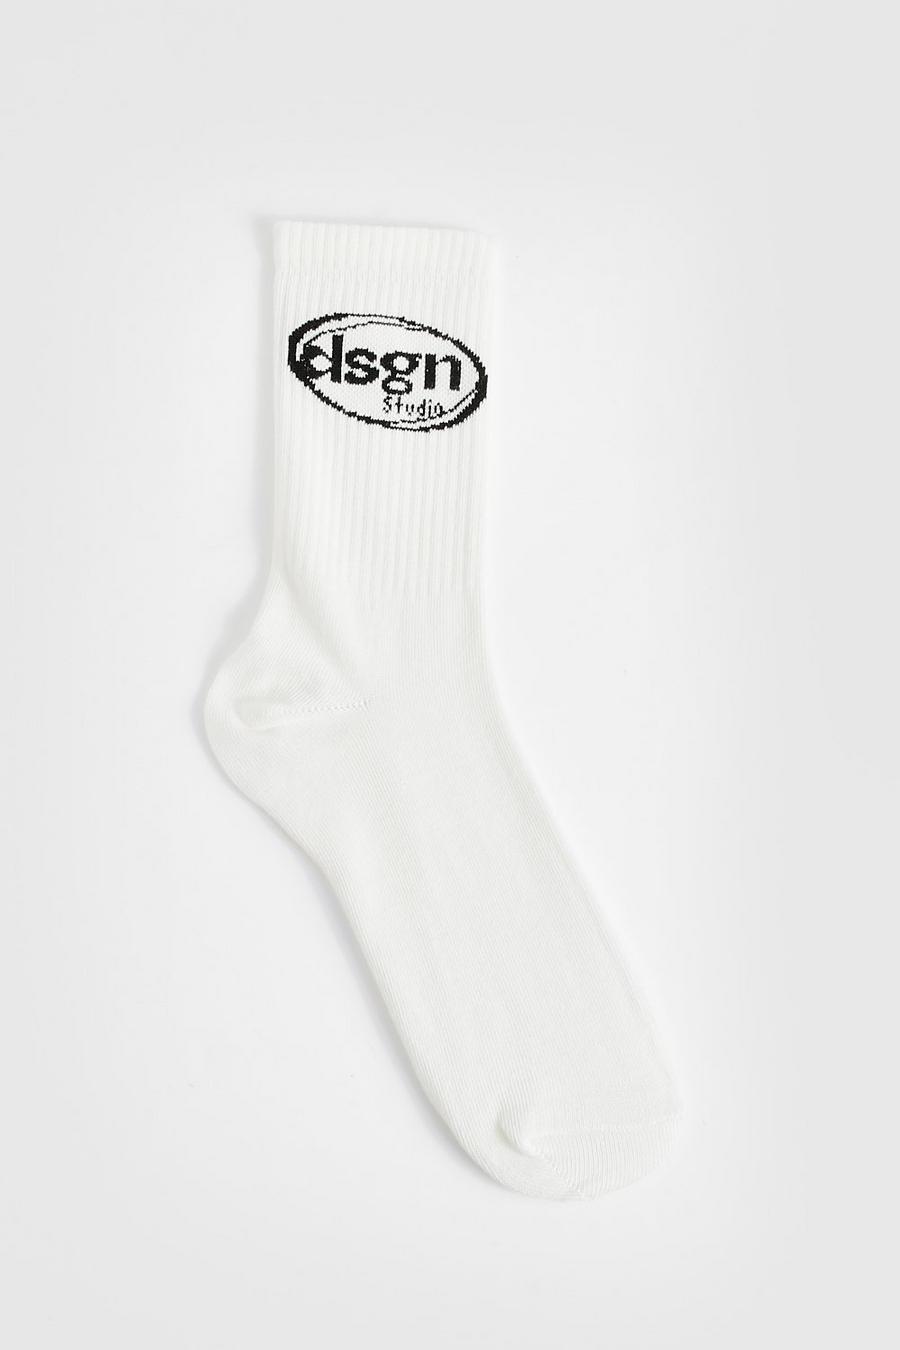 Ecru Single Dsgn Studio Slogan Sports Sock